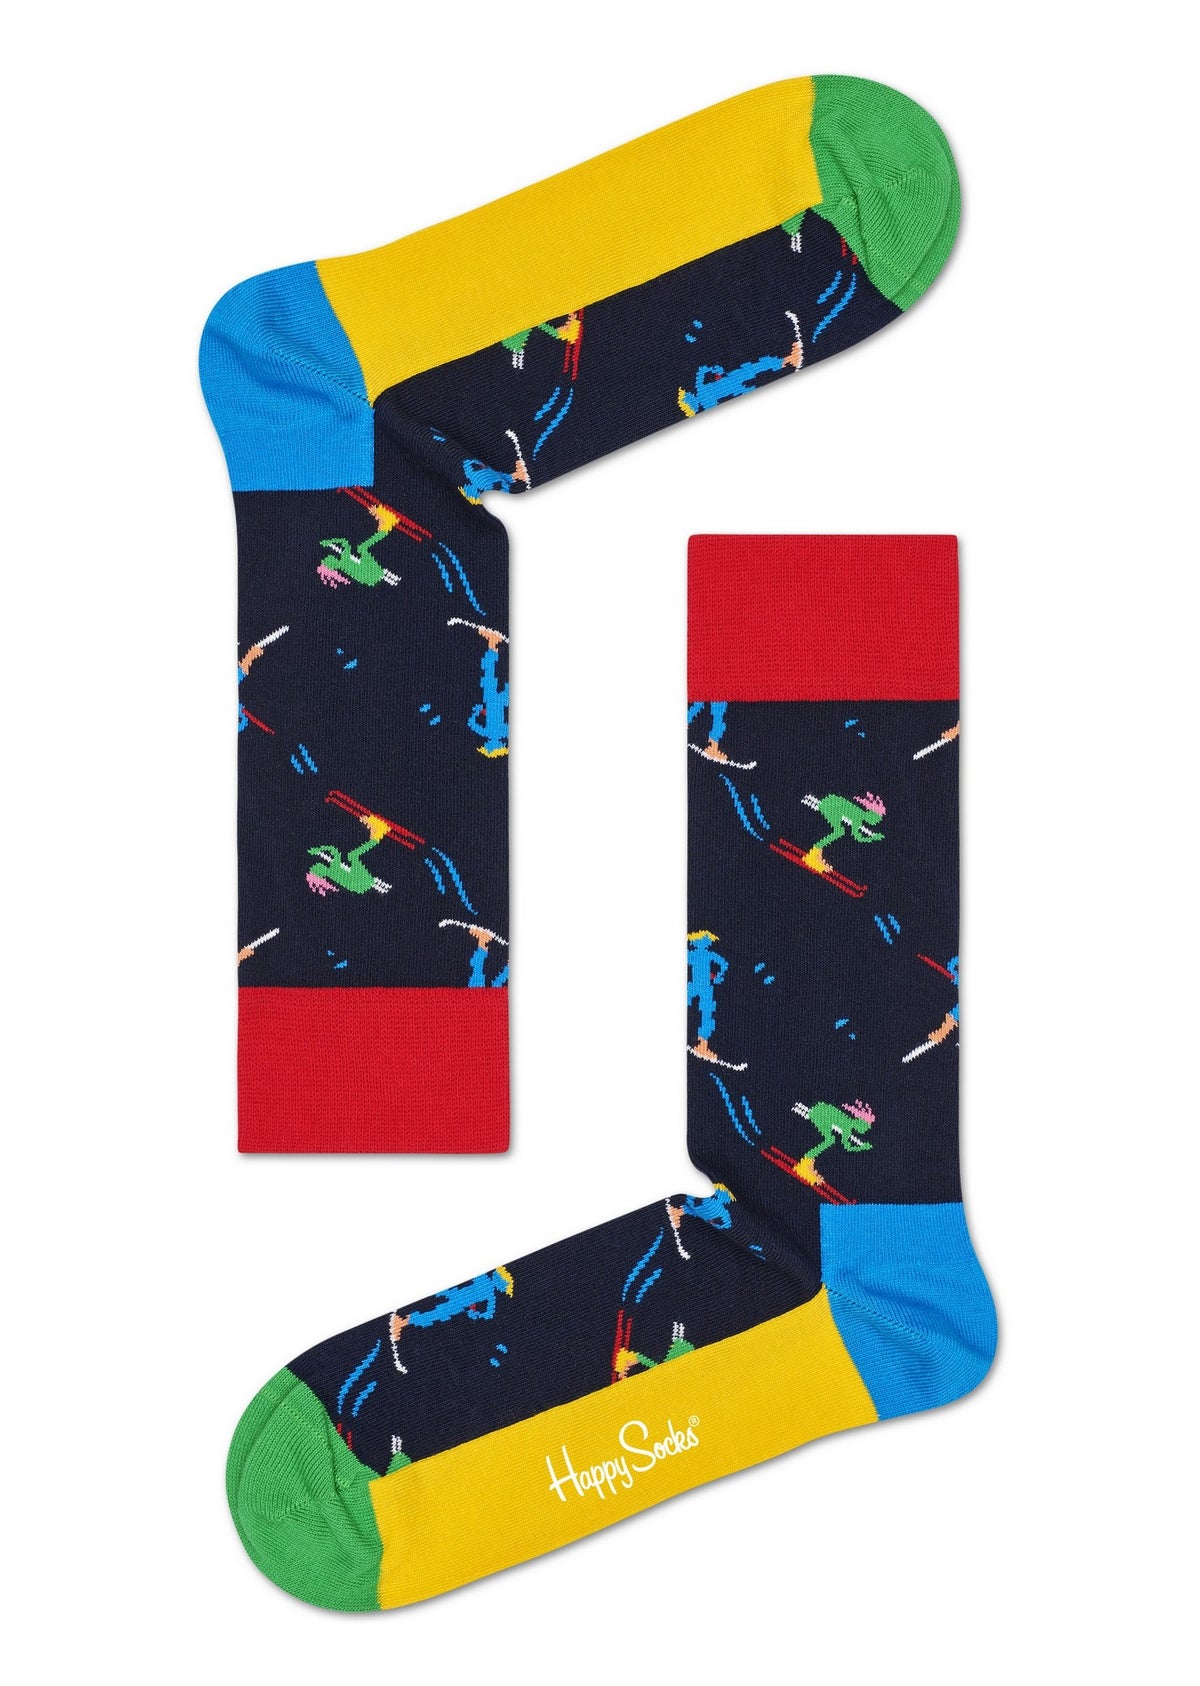 Skiers Sock SKI01